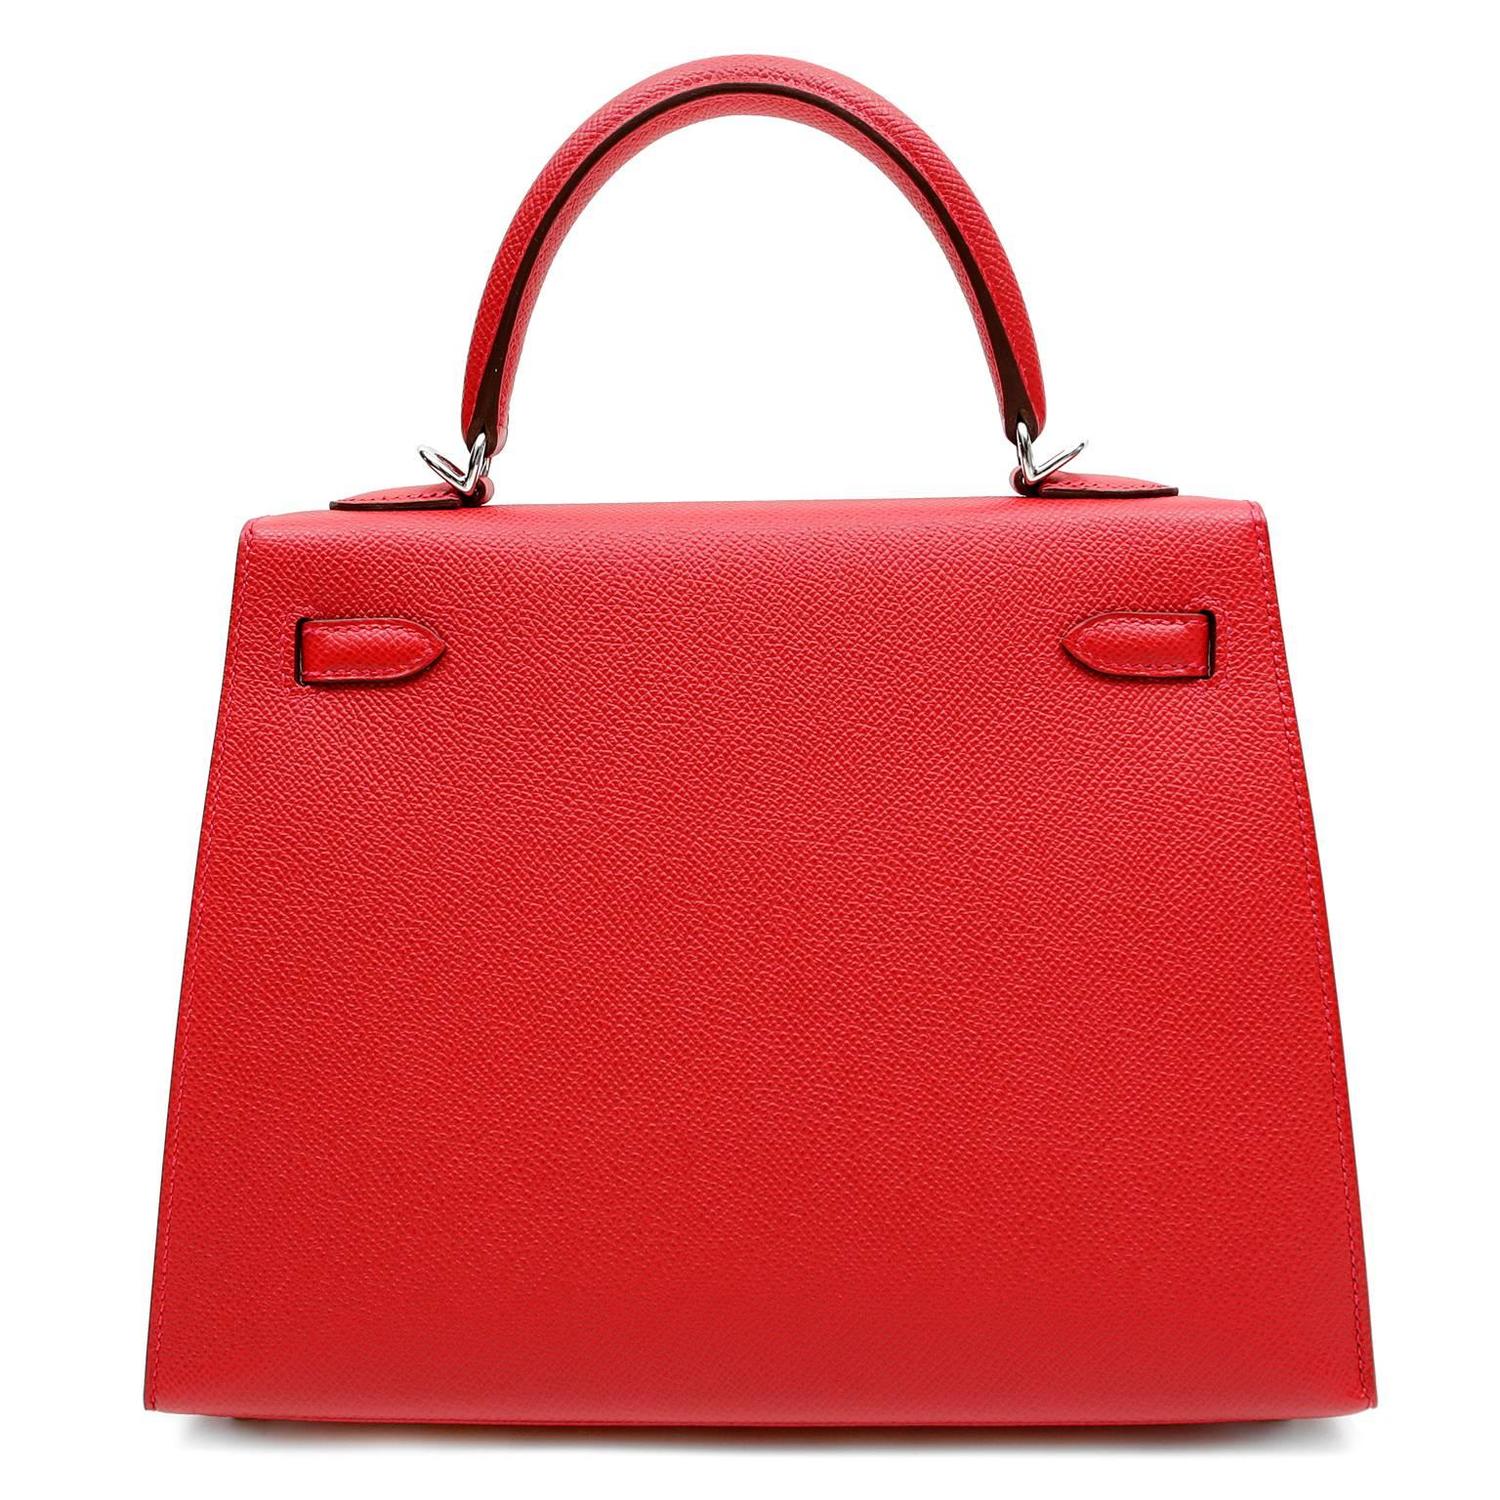 New Iconic Hermès Kelly bag - SeaChange